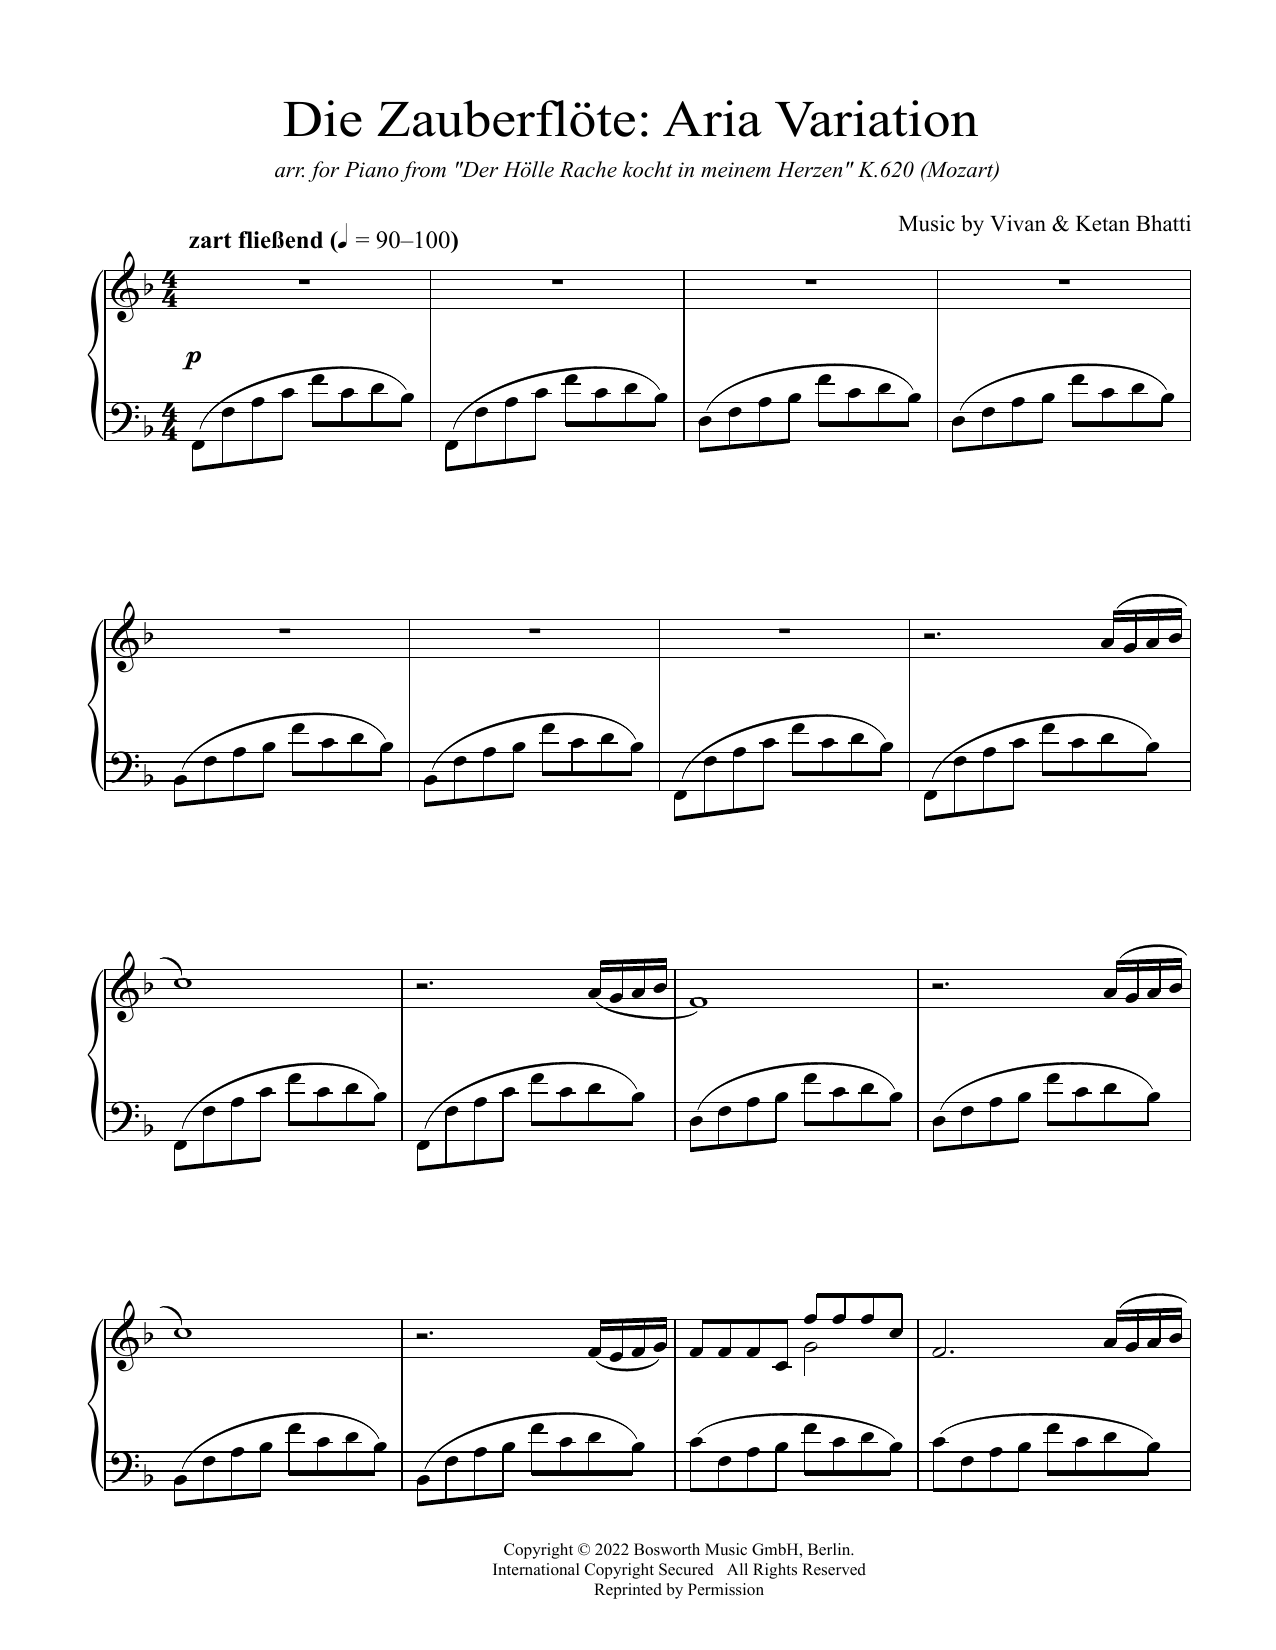 Vivan & Ketan Bhatti Die Zauberflöte: Aria Variation sheet music notes and chords arranged for Piano Solo